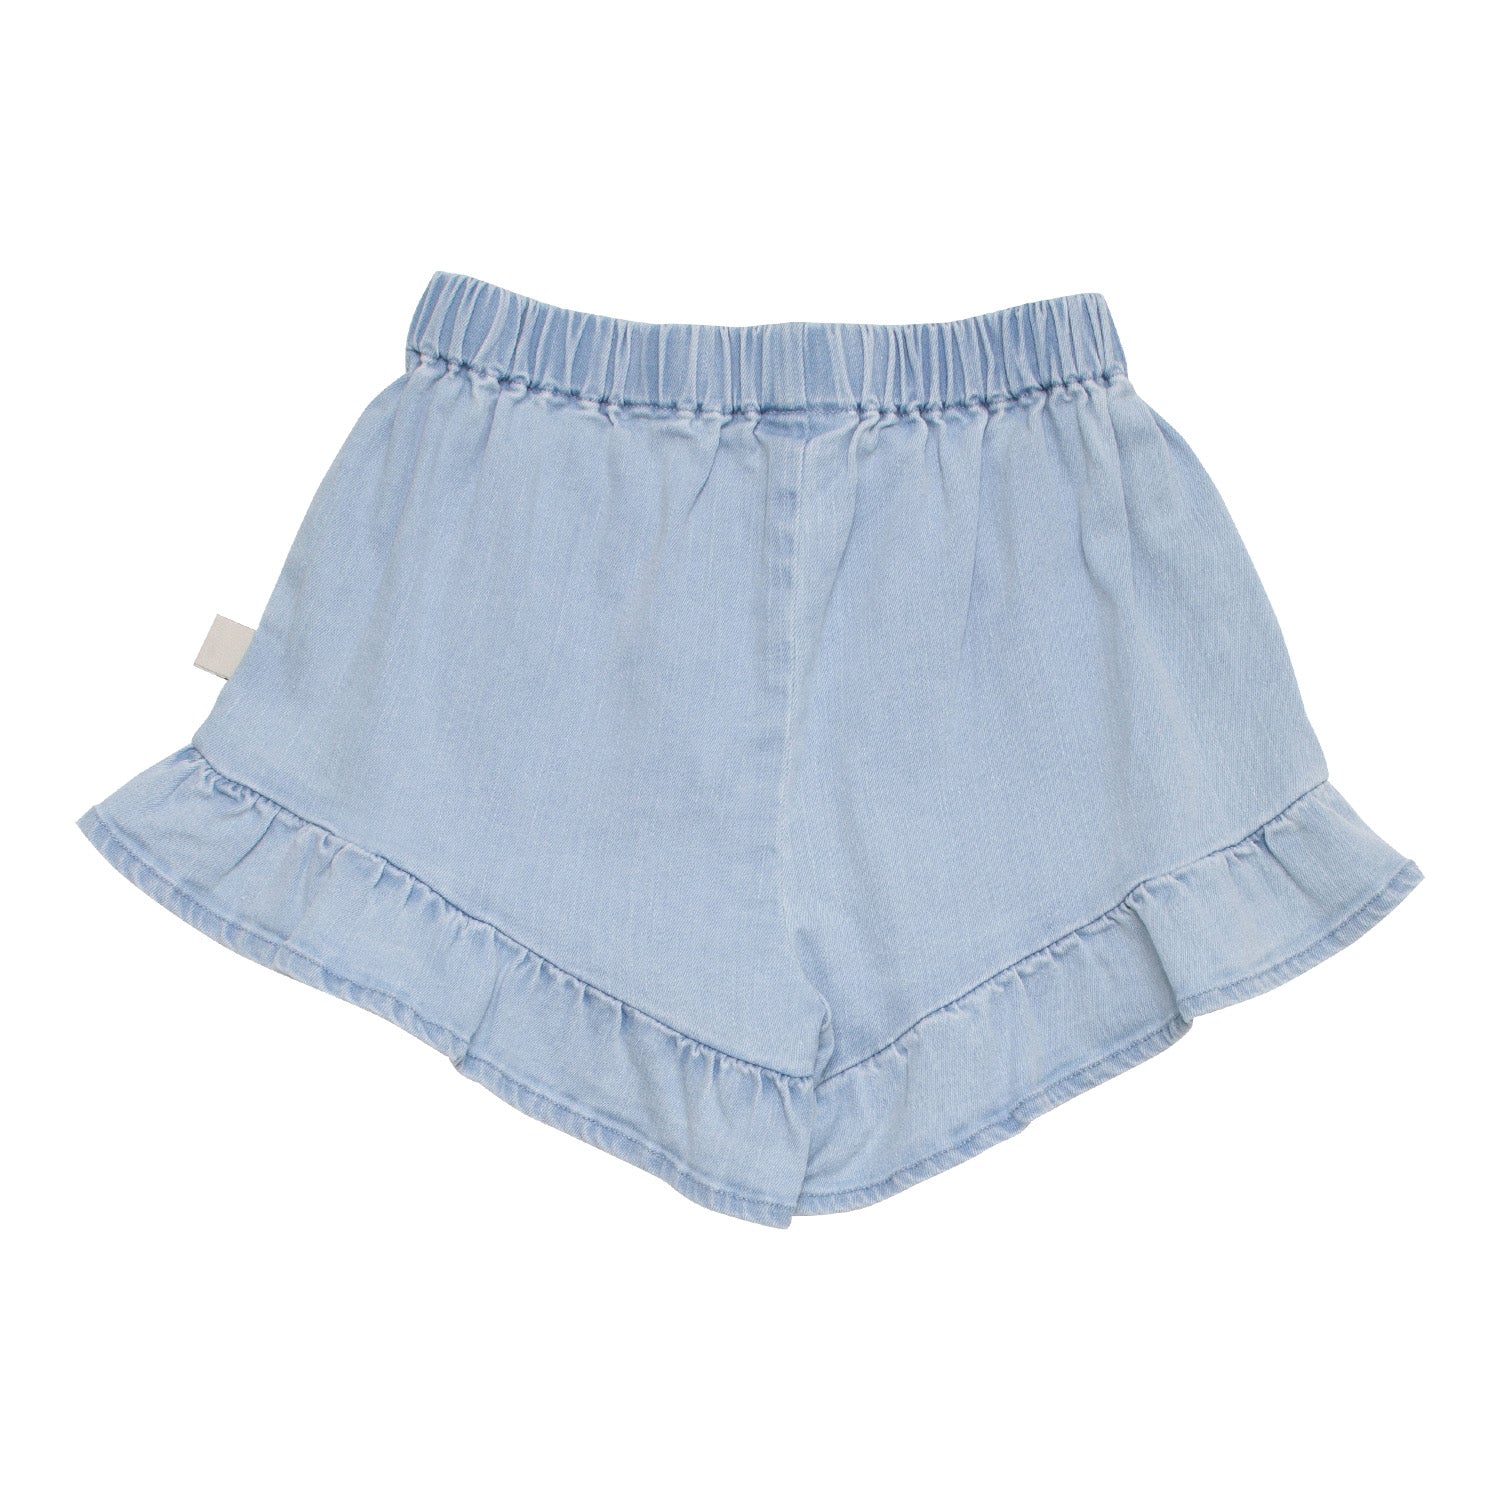 Girls Pale Blue Denim Shorts